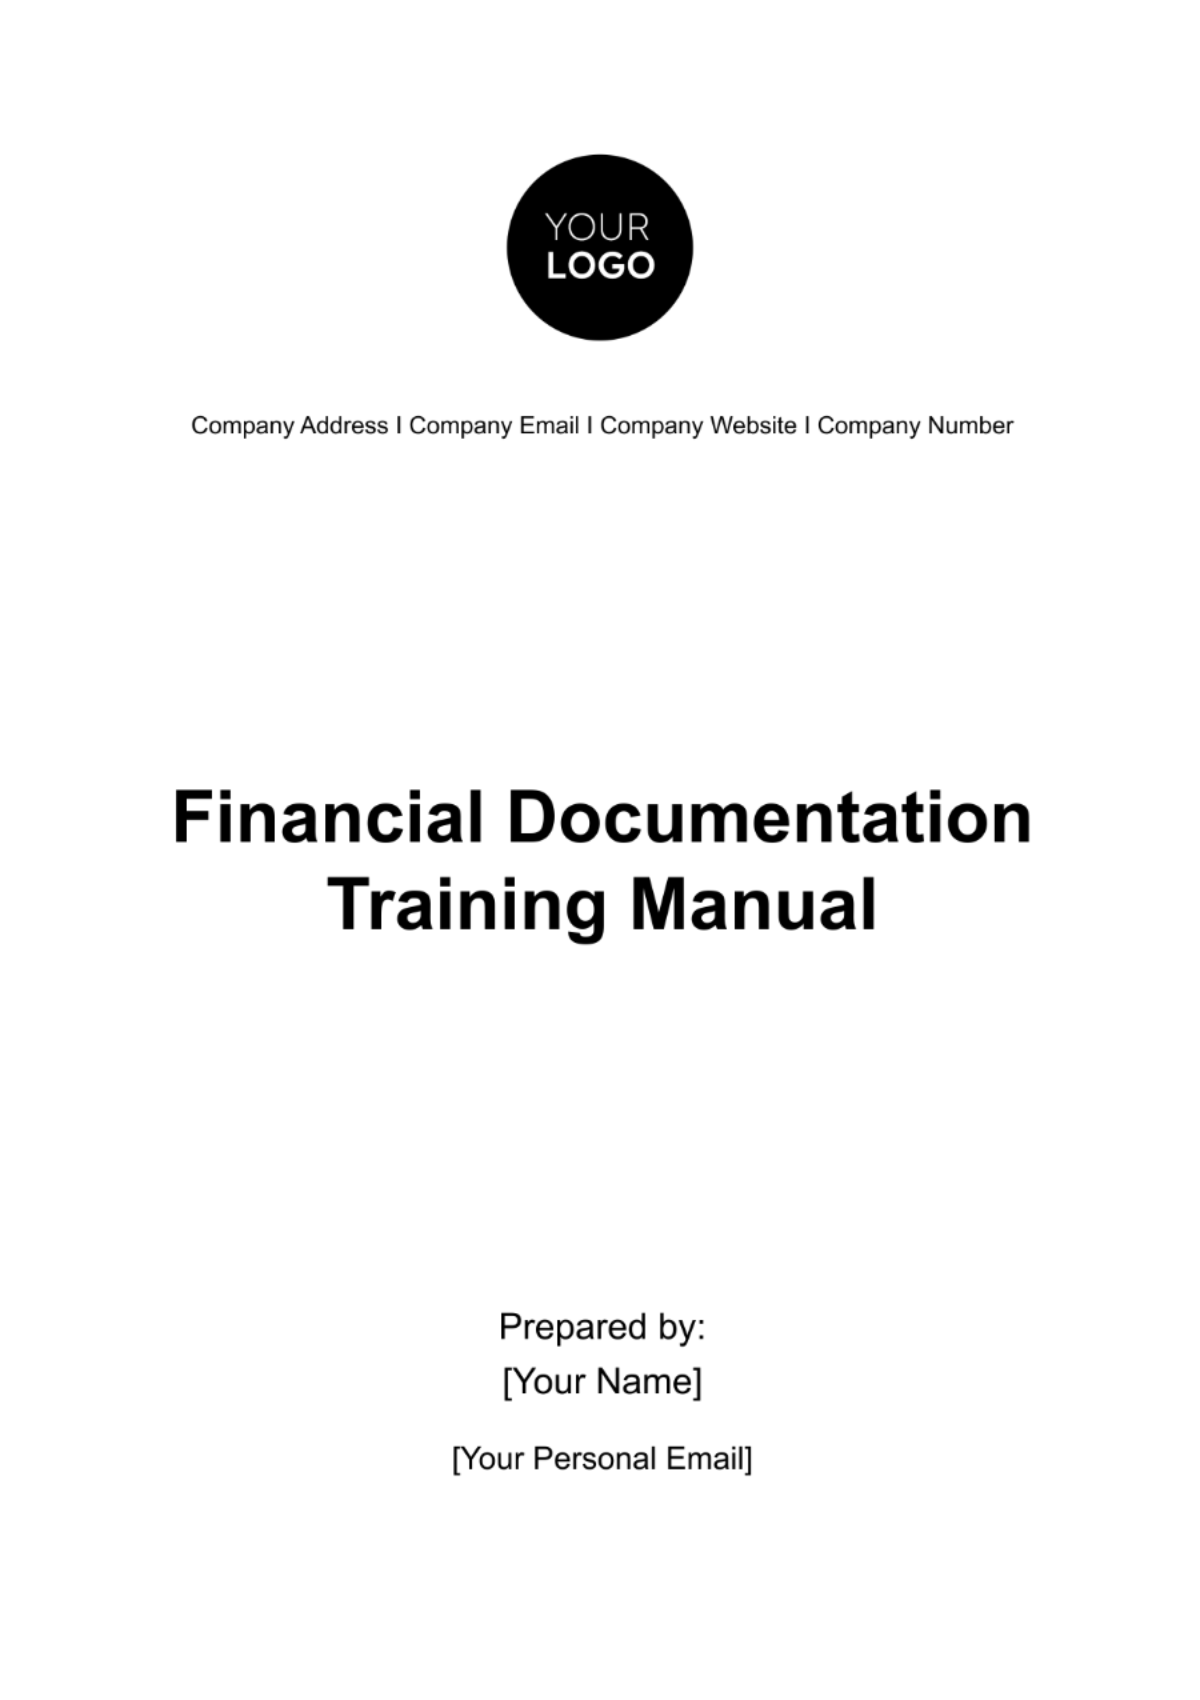 Free Financial Documentation Training Manual Template